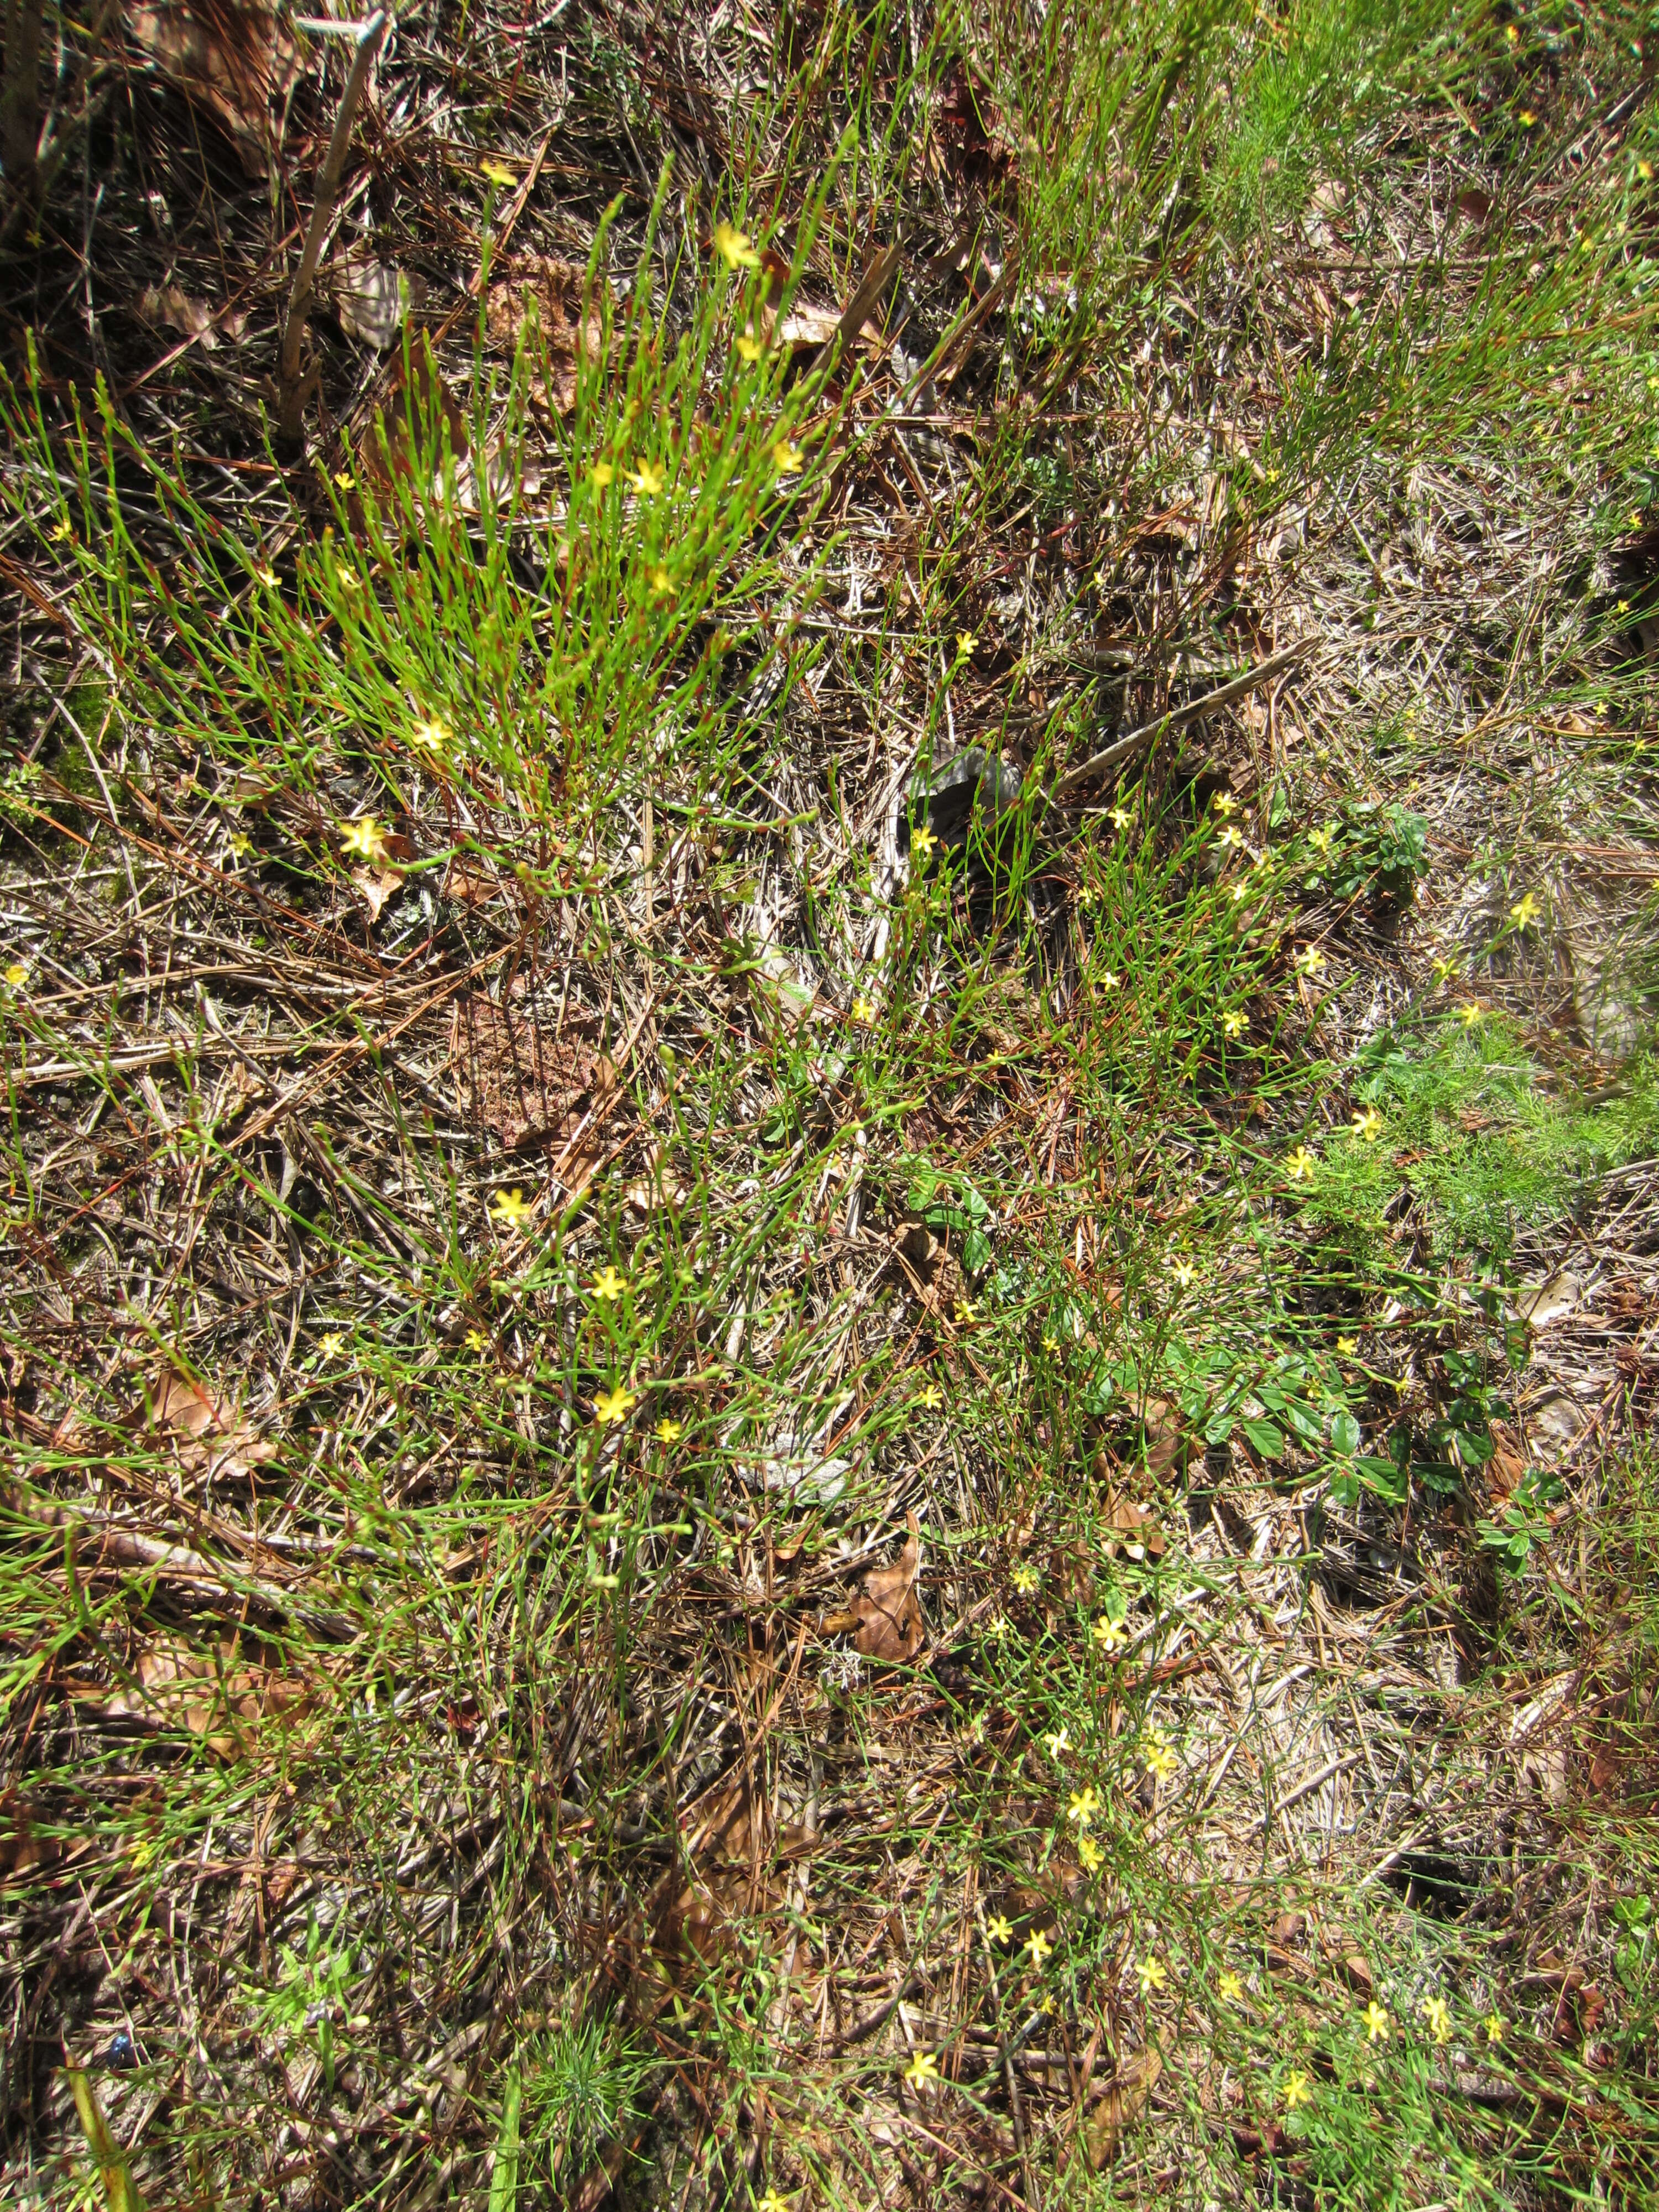 Image of orangegrass